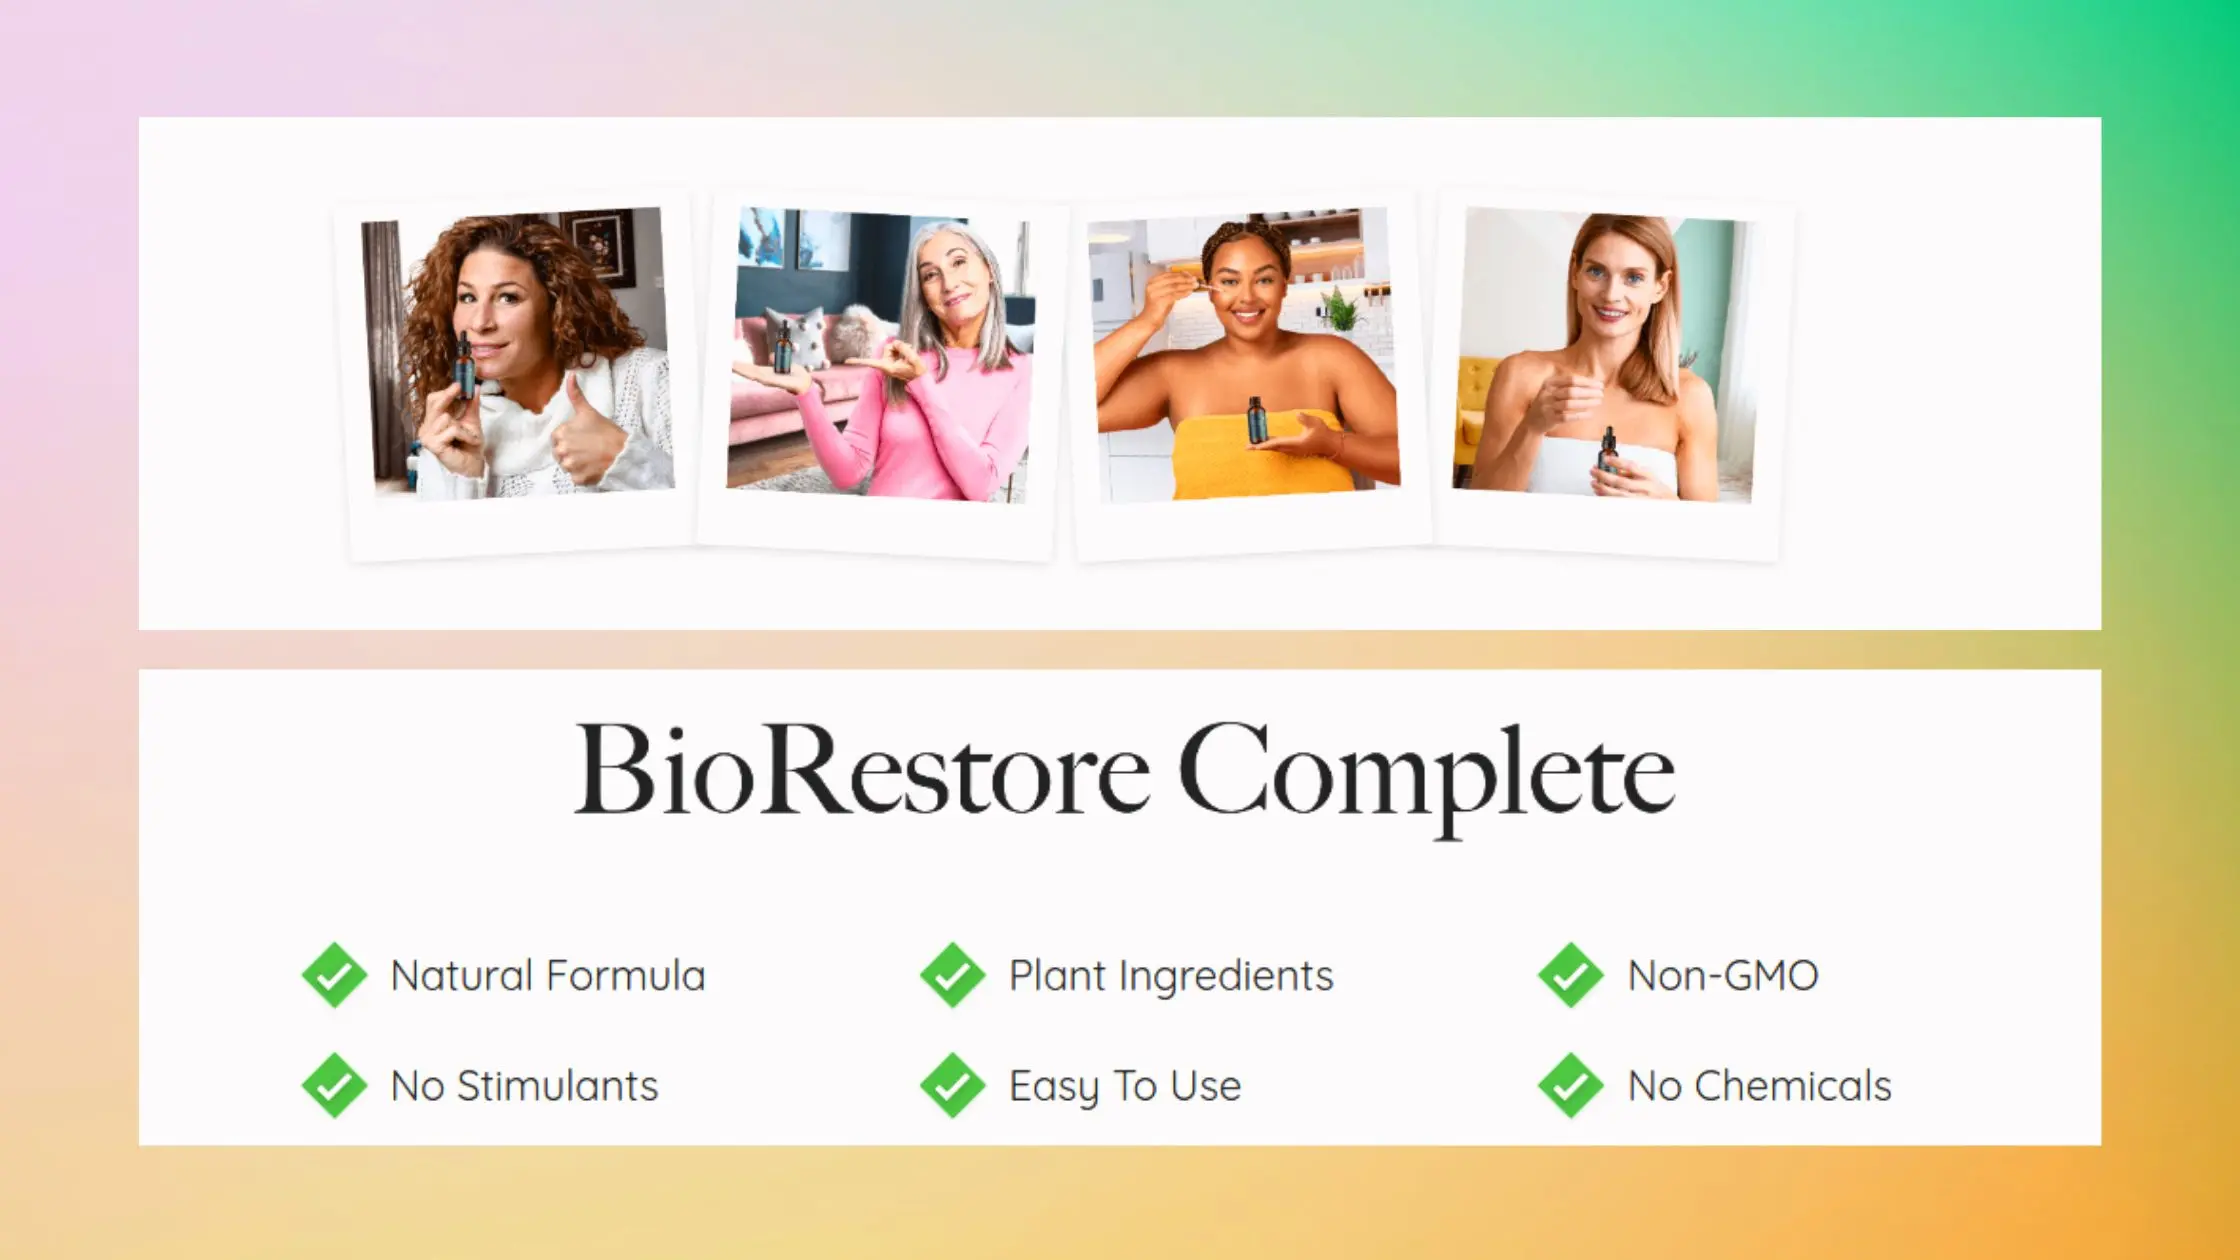 BioRestore Complete Benefits